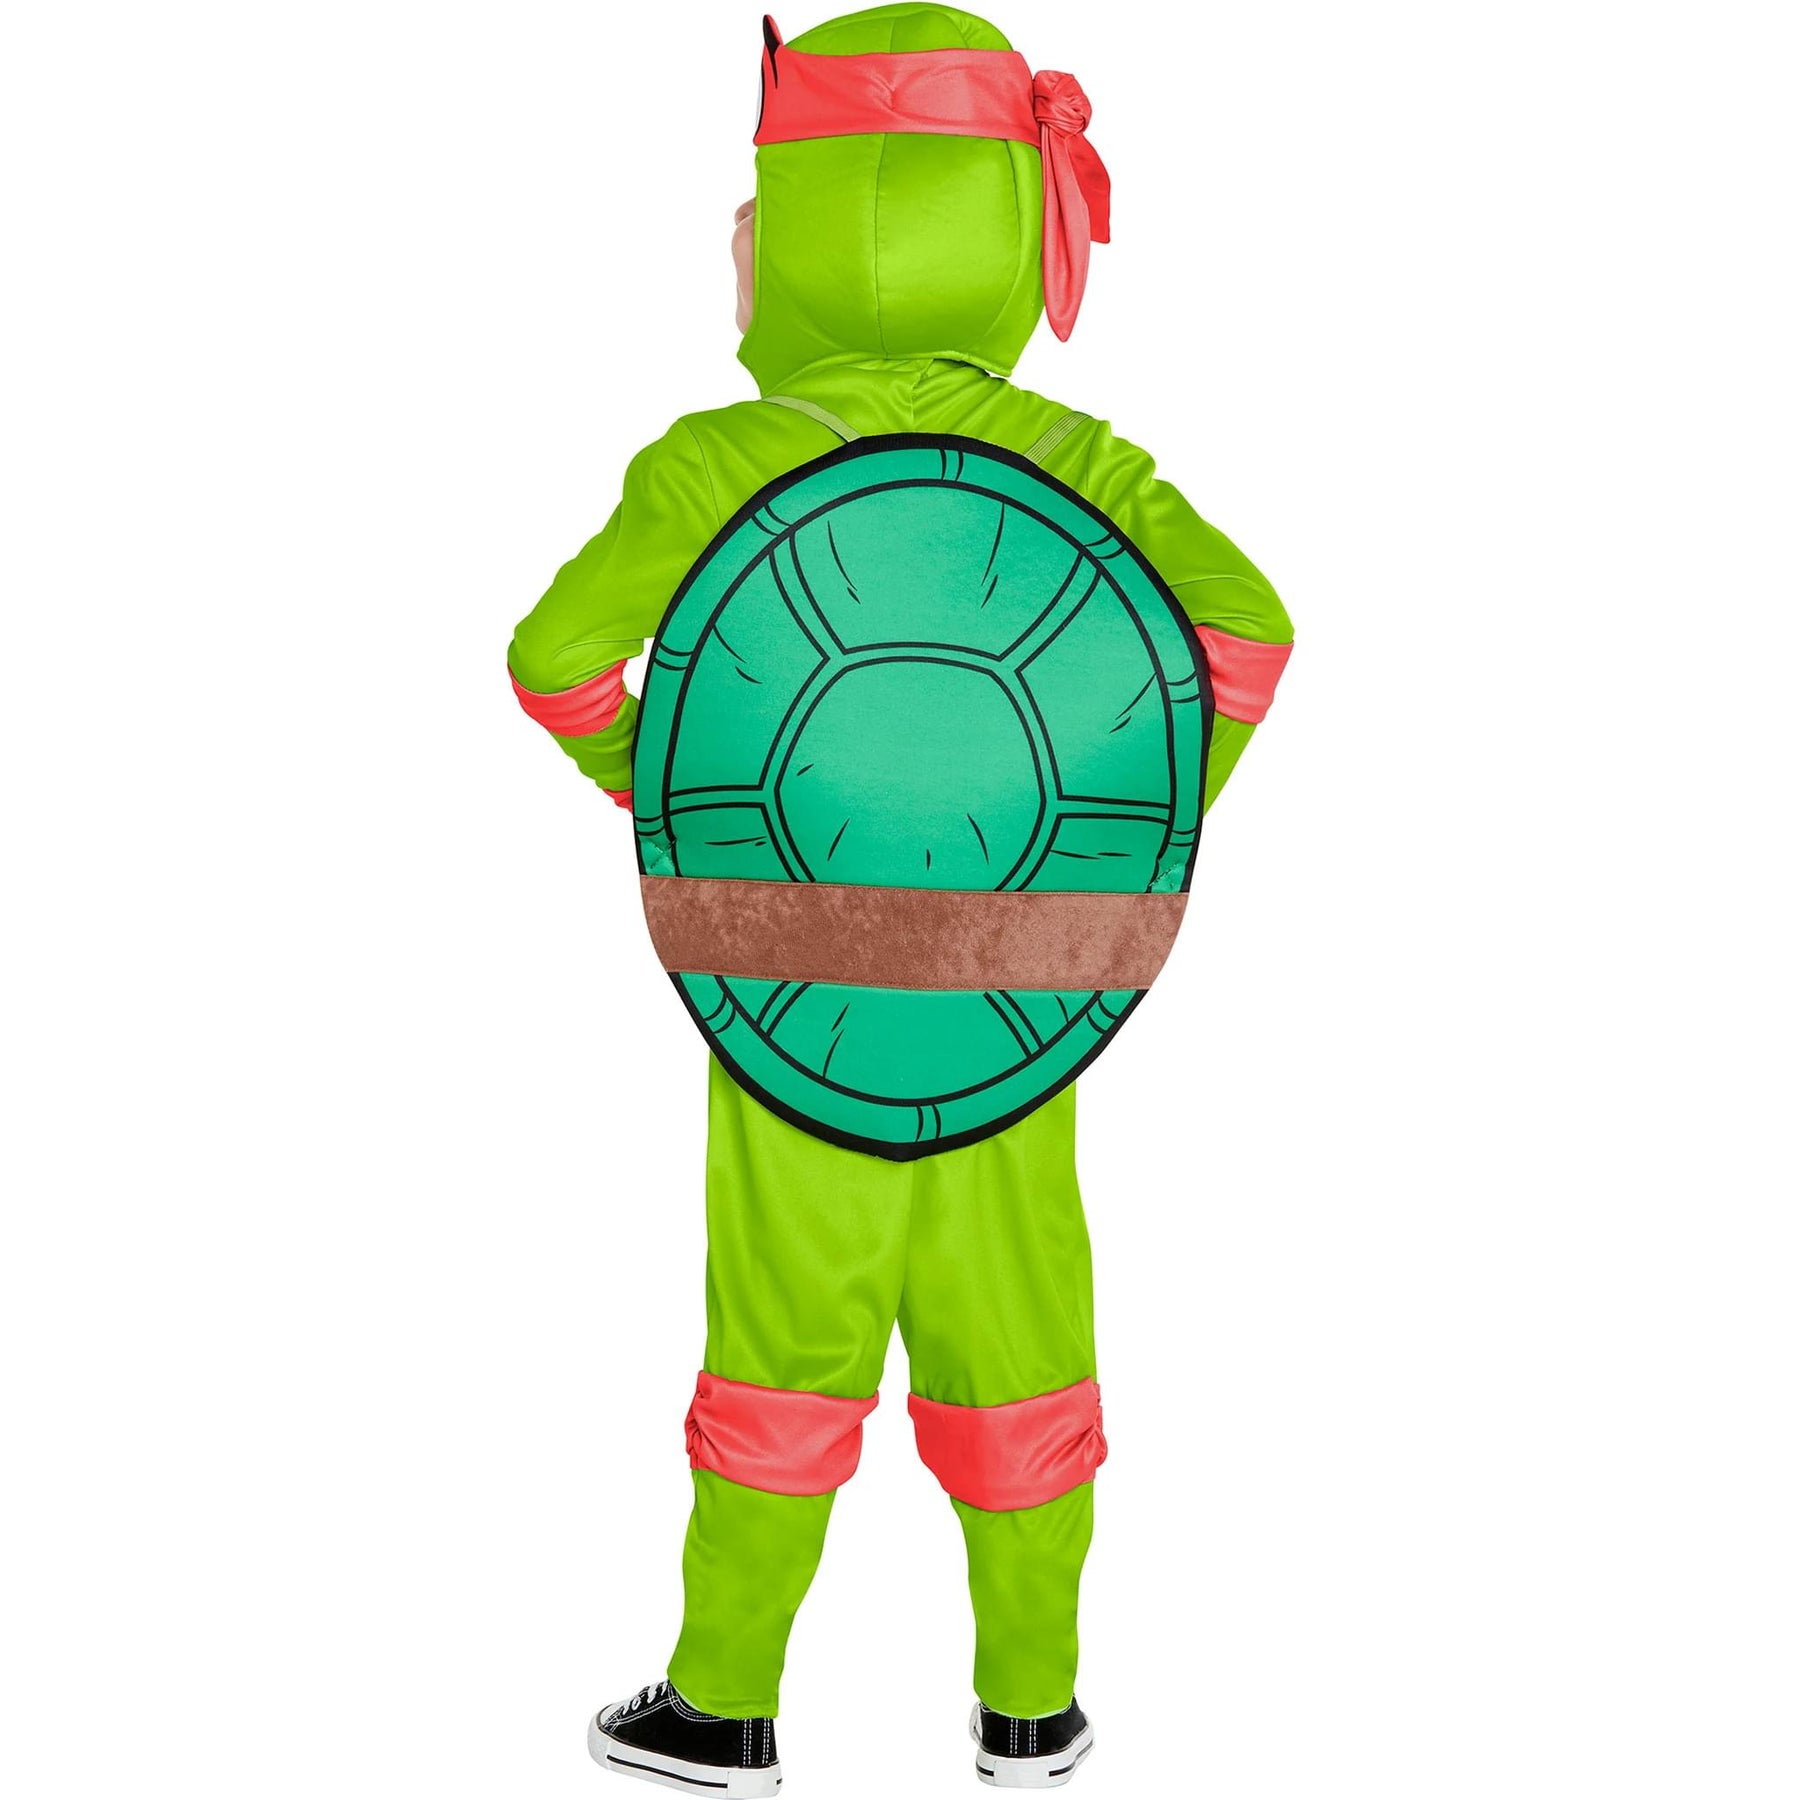 TMNT Raphael Toddler Costume